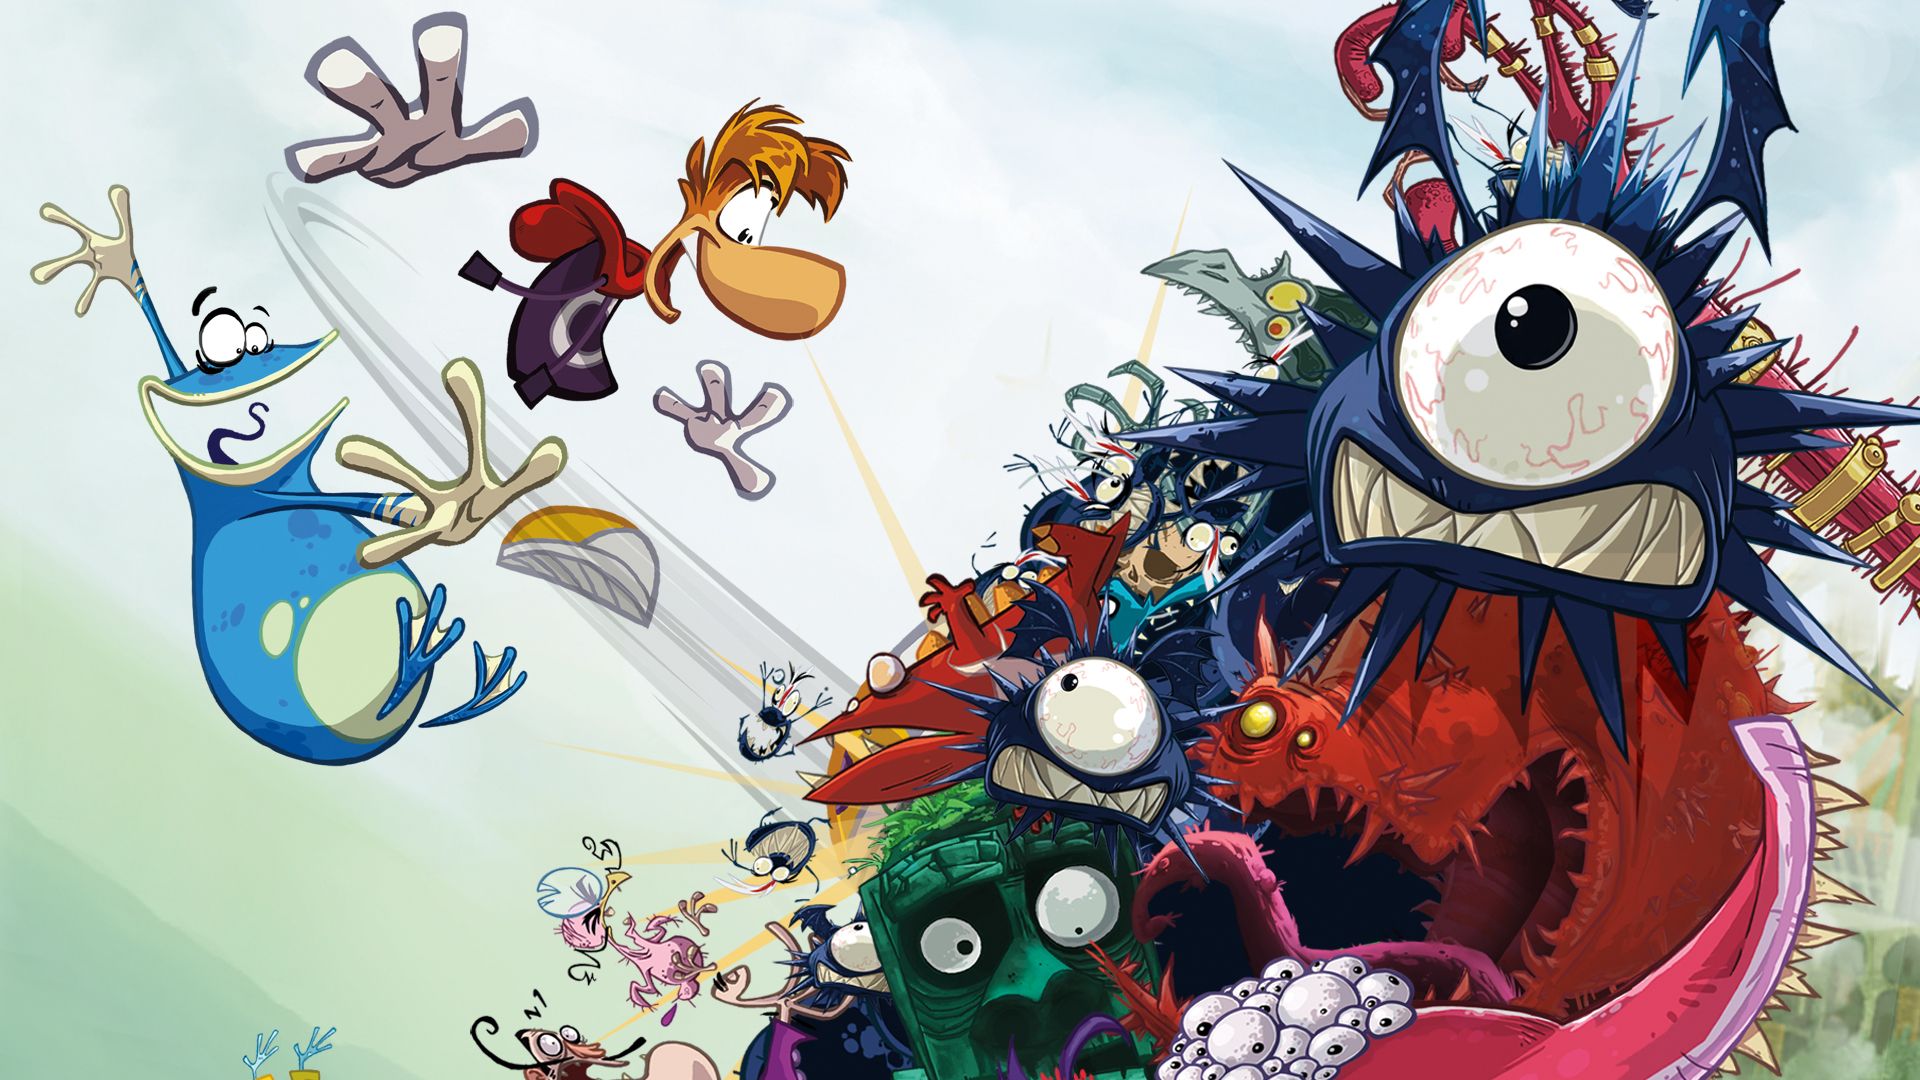 Rayman Origins HD wallpapers, Desktop wallpaper - most viewed